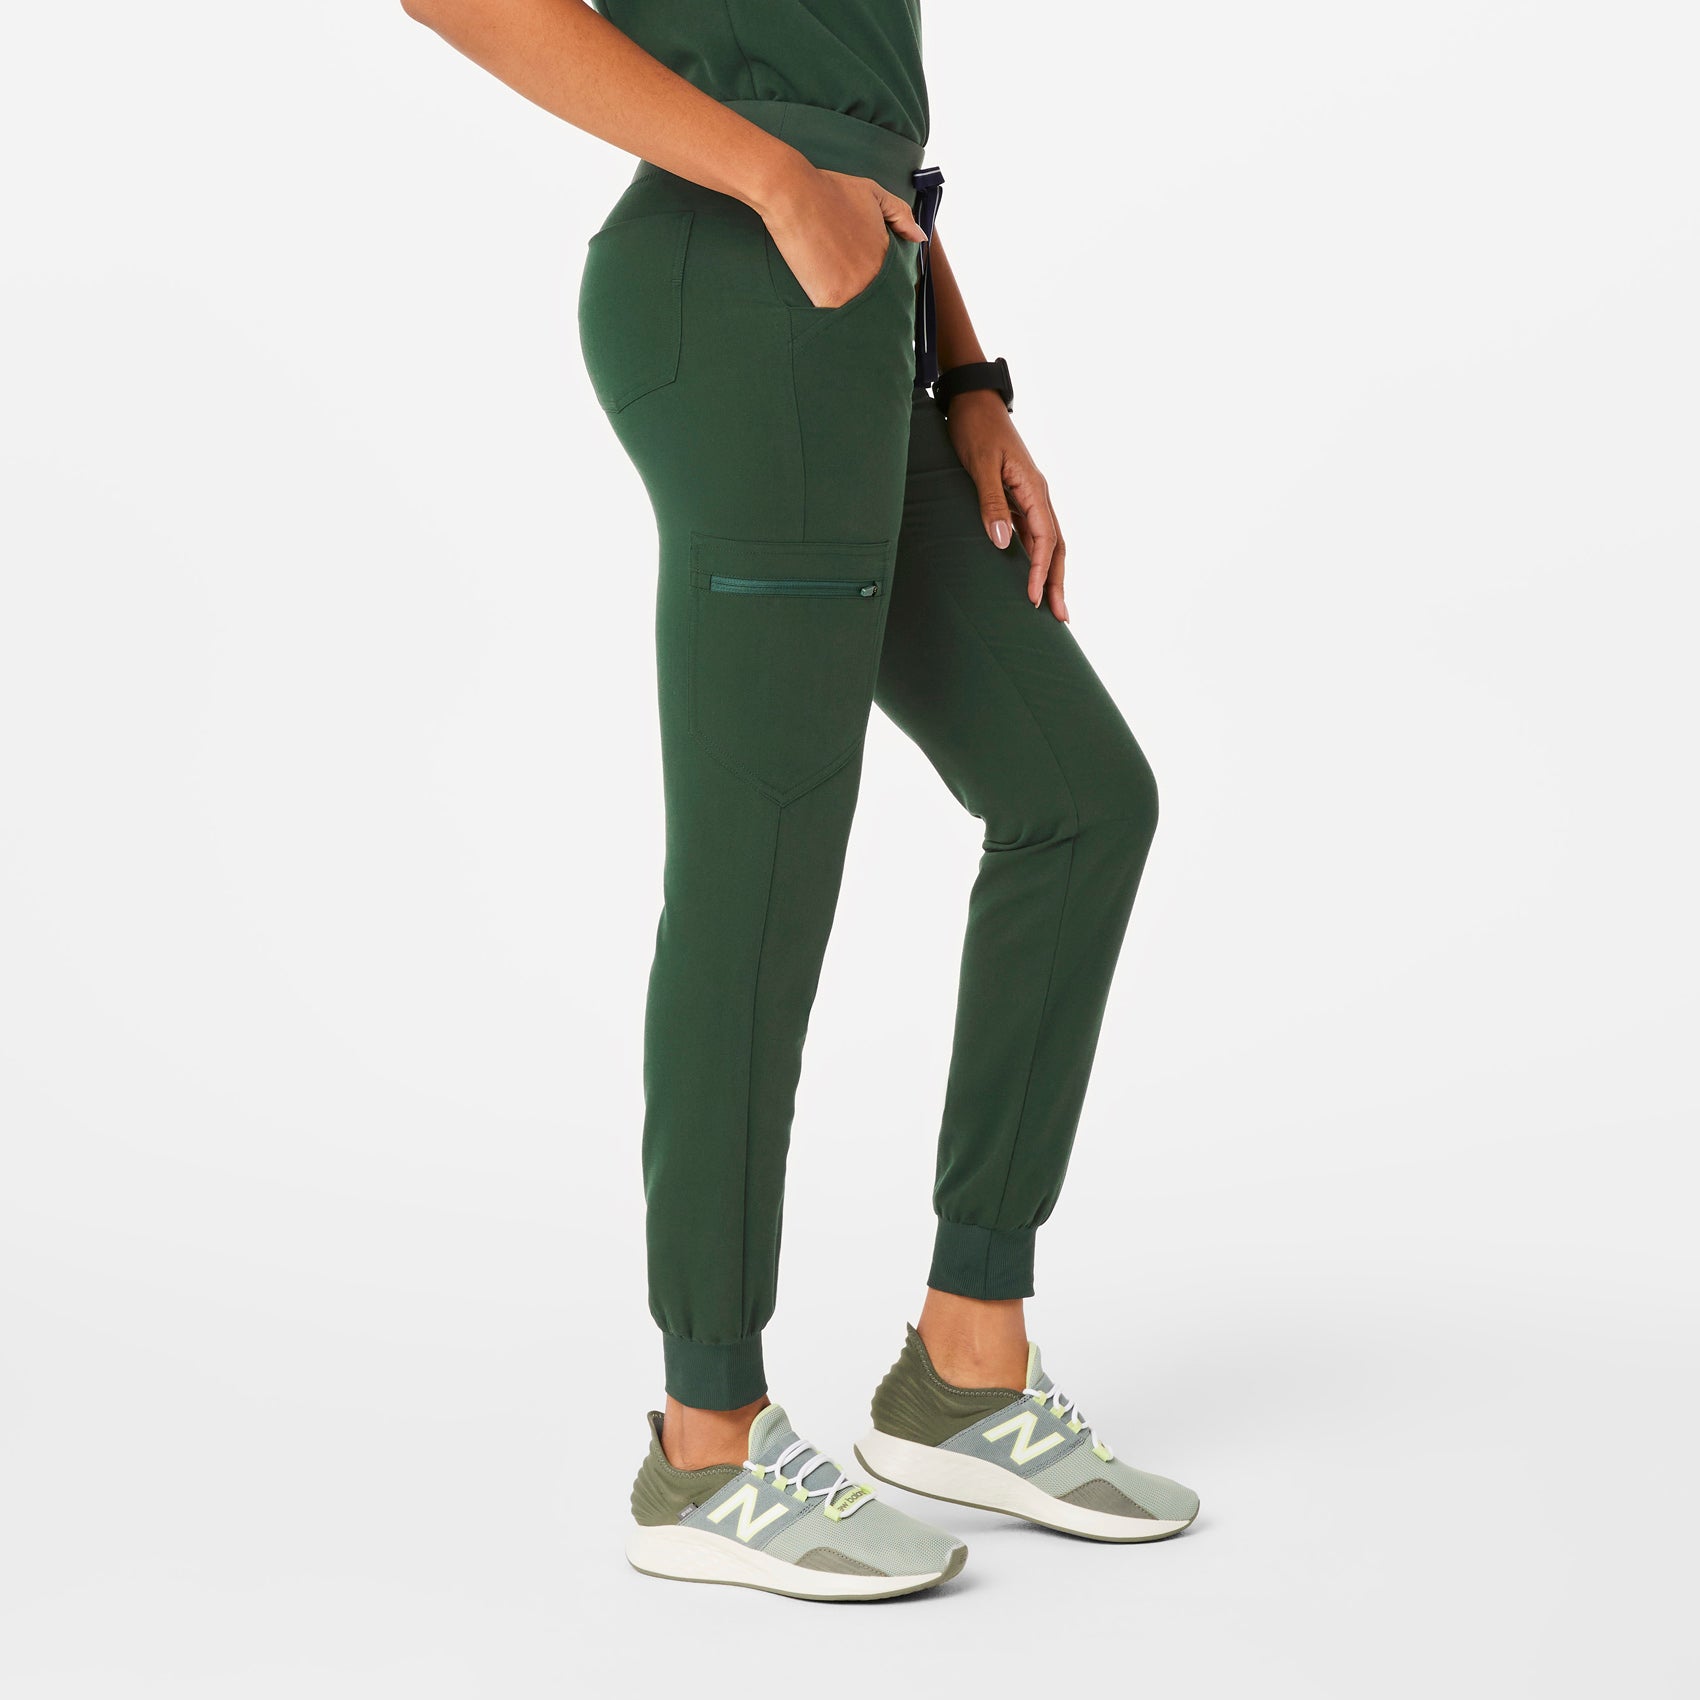 Pantalón deportivo de uniforme médico Zamora™ para mujer - Verde